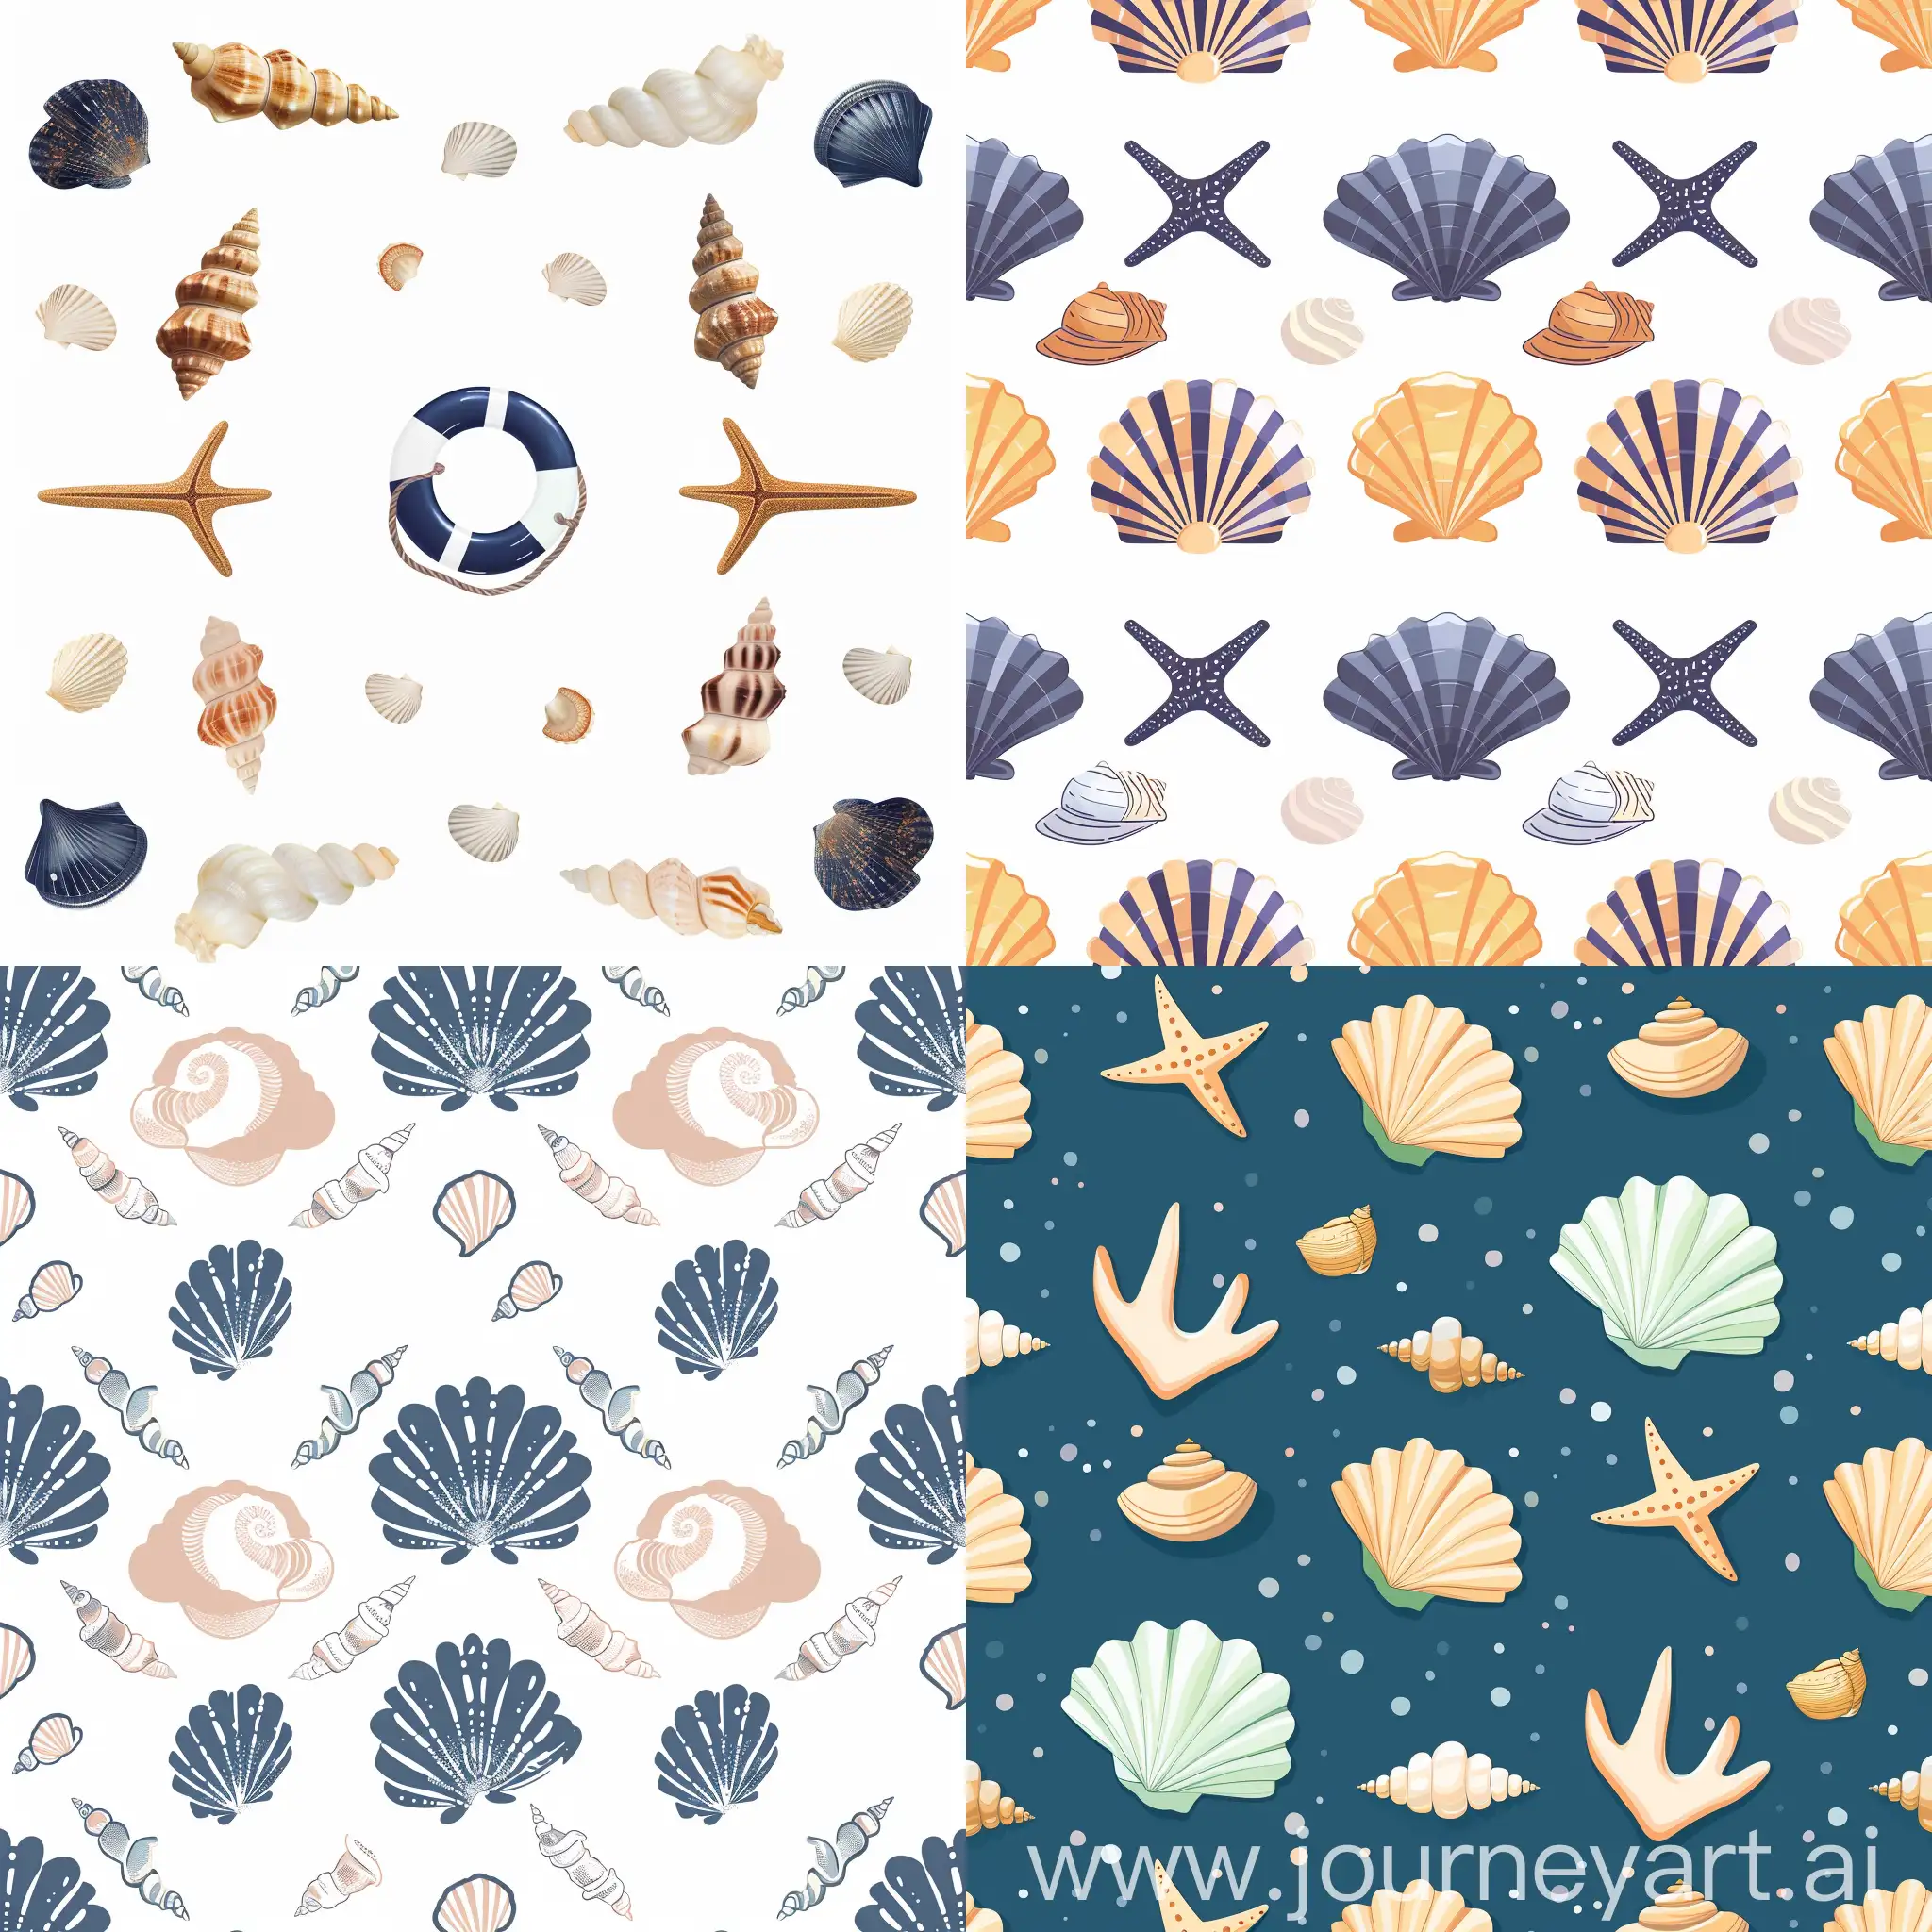 Seashell-Pattern-Design-Beachside-Ambiance-with-NauticalThemed-Decor